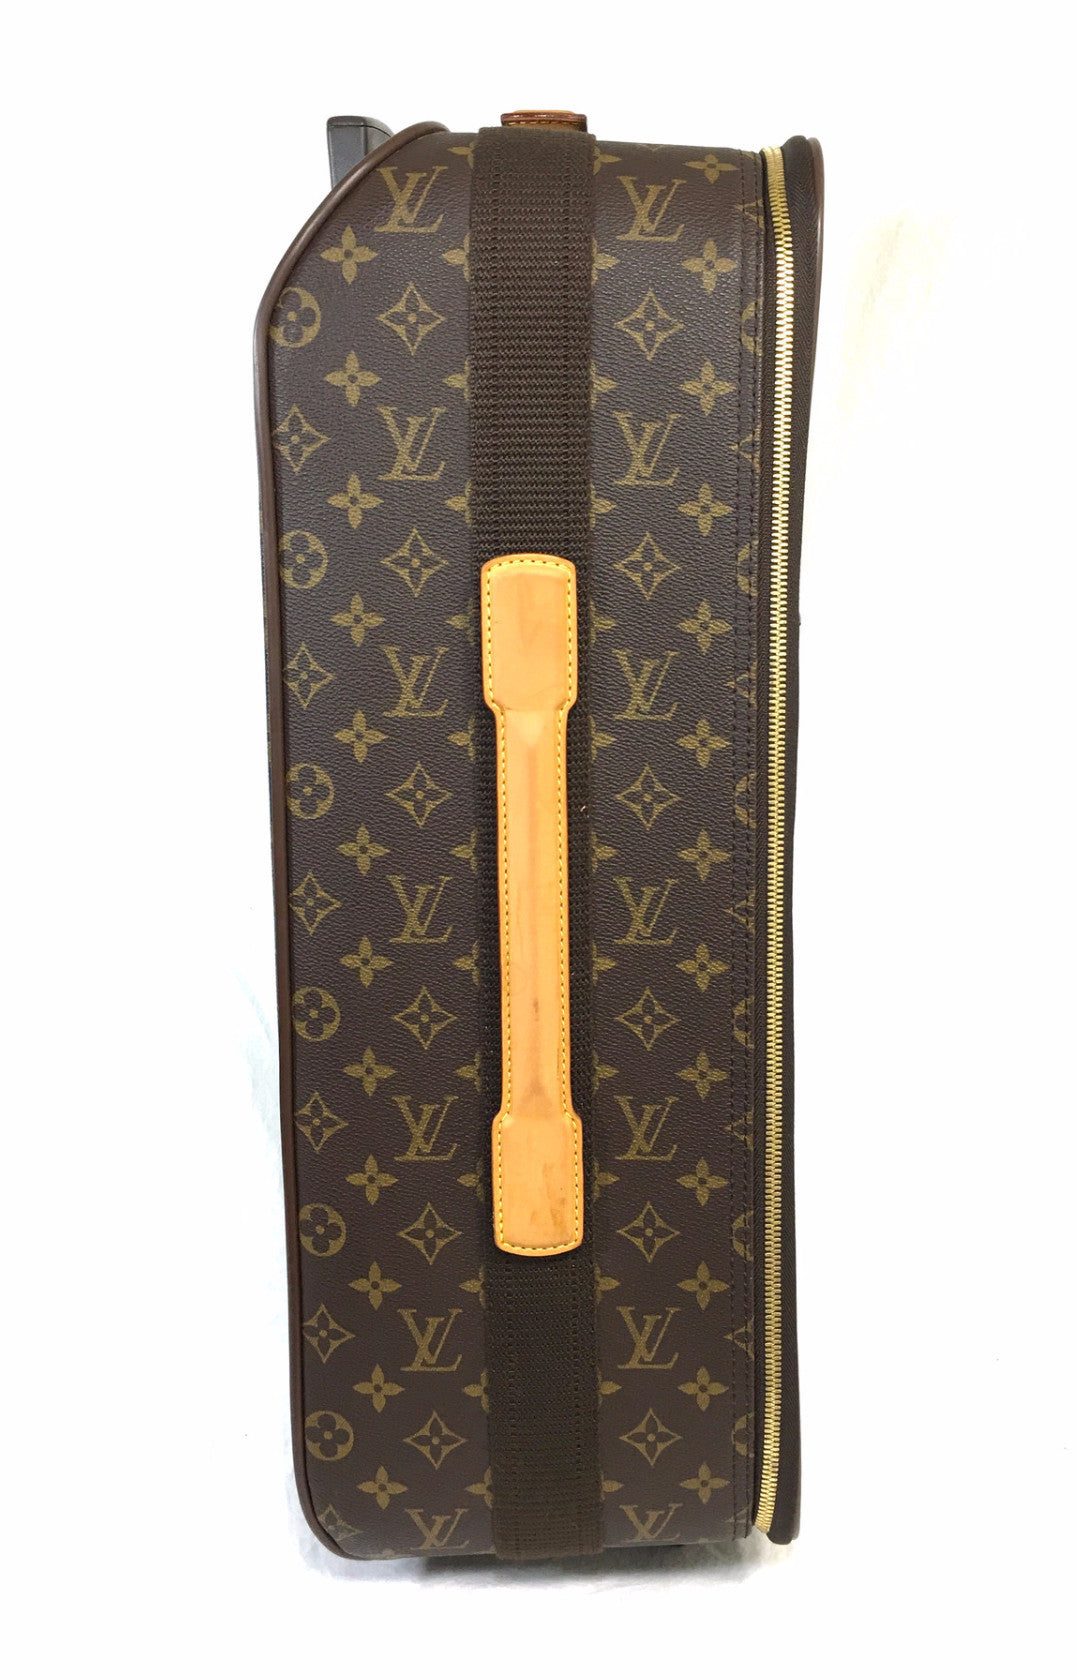 Louis Vuitton Pegase 55 Rolling Suitcase GraphiteCHF 4,182.00